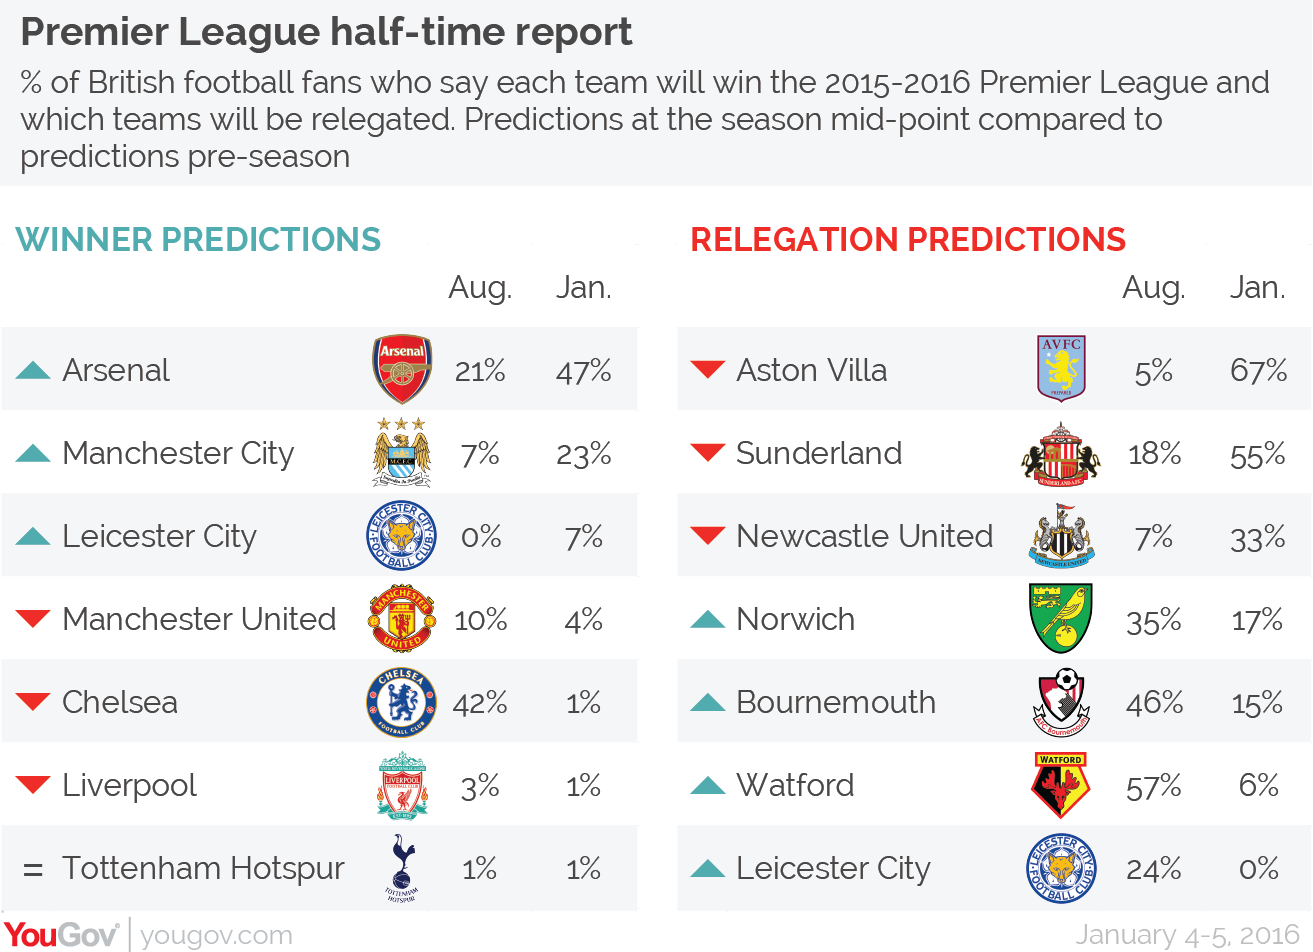 YouGov | Premier League mid-season predictions: Arsenal to win, Villa for relegation